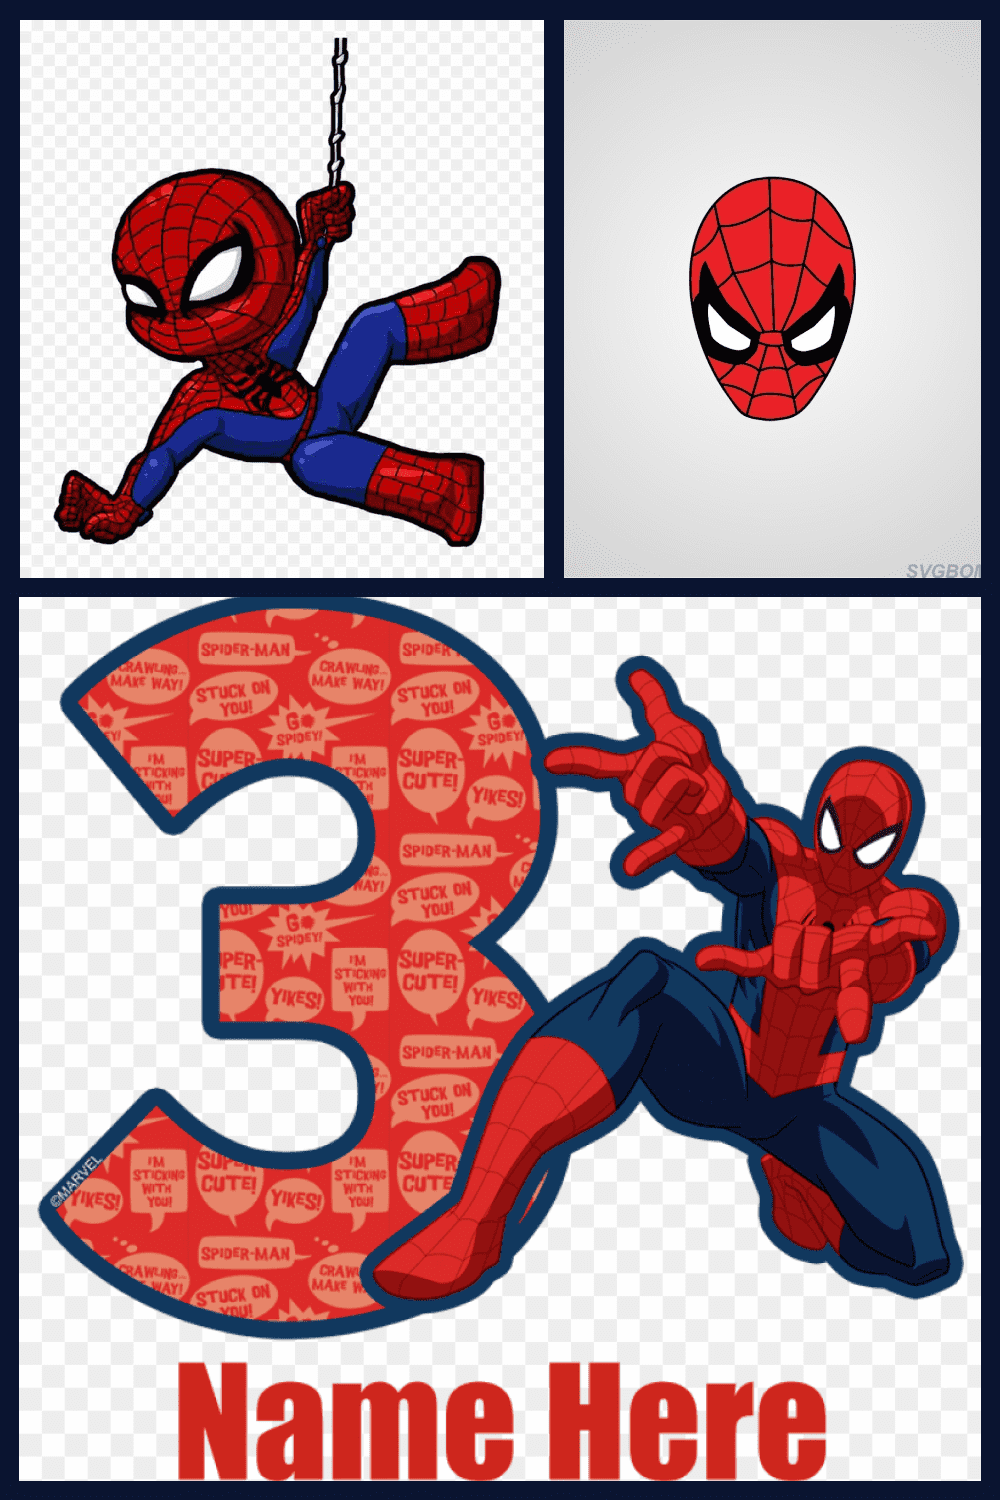 Spiderman Svg Free Images.